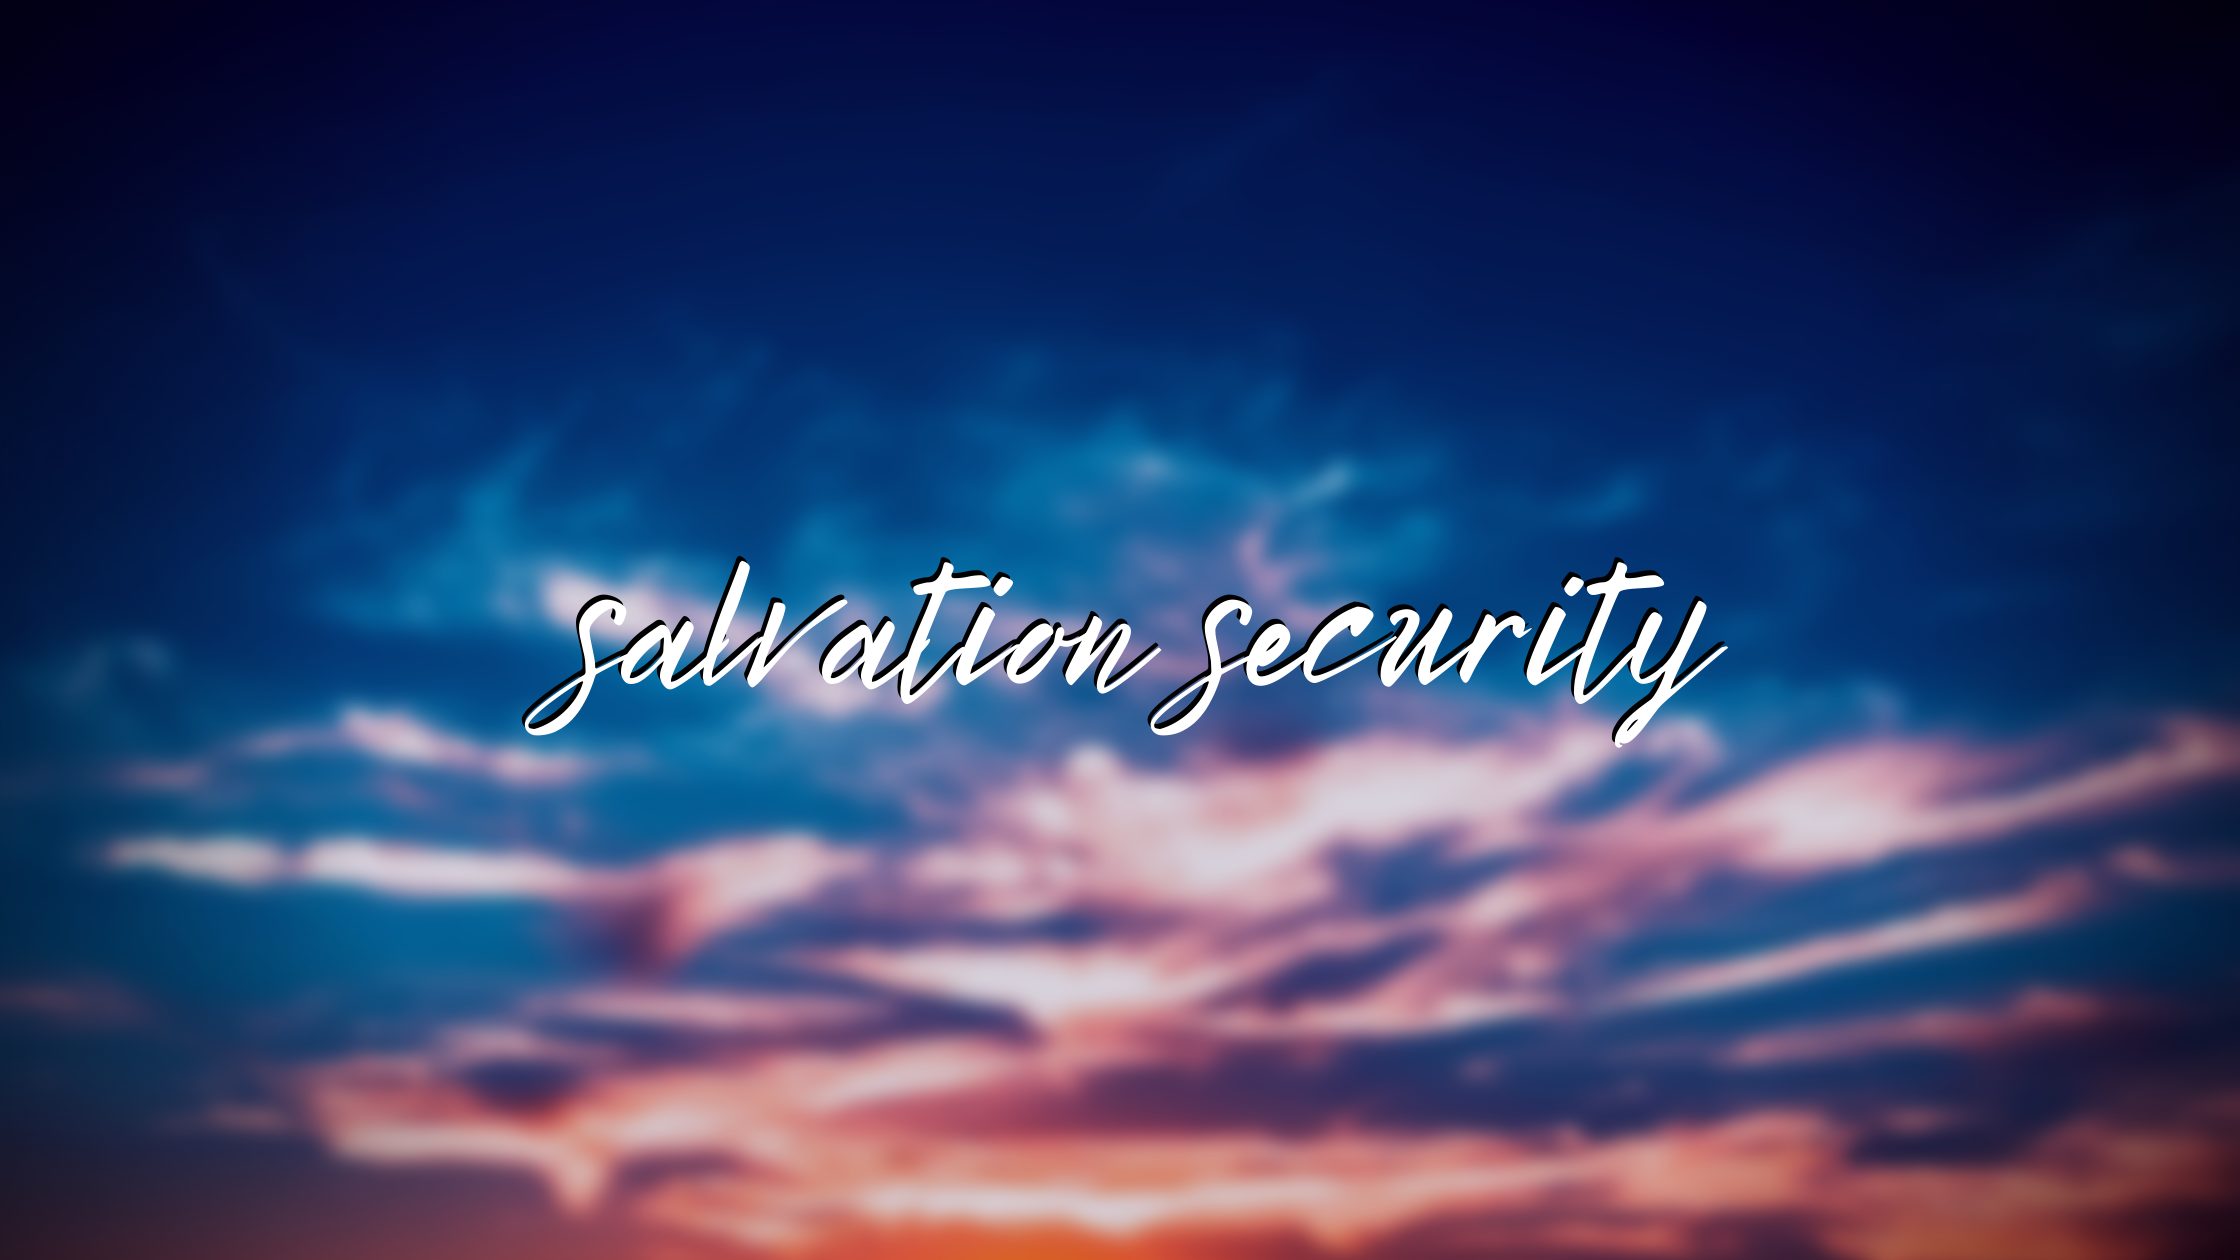 Salvation security